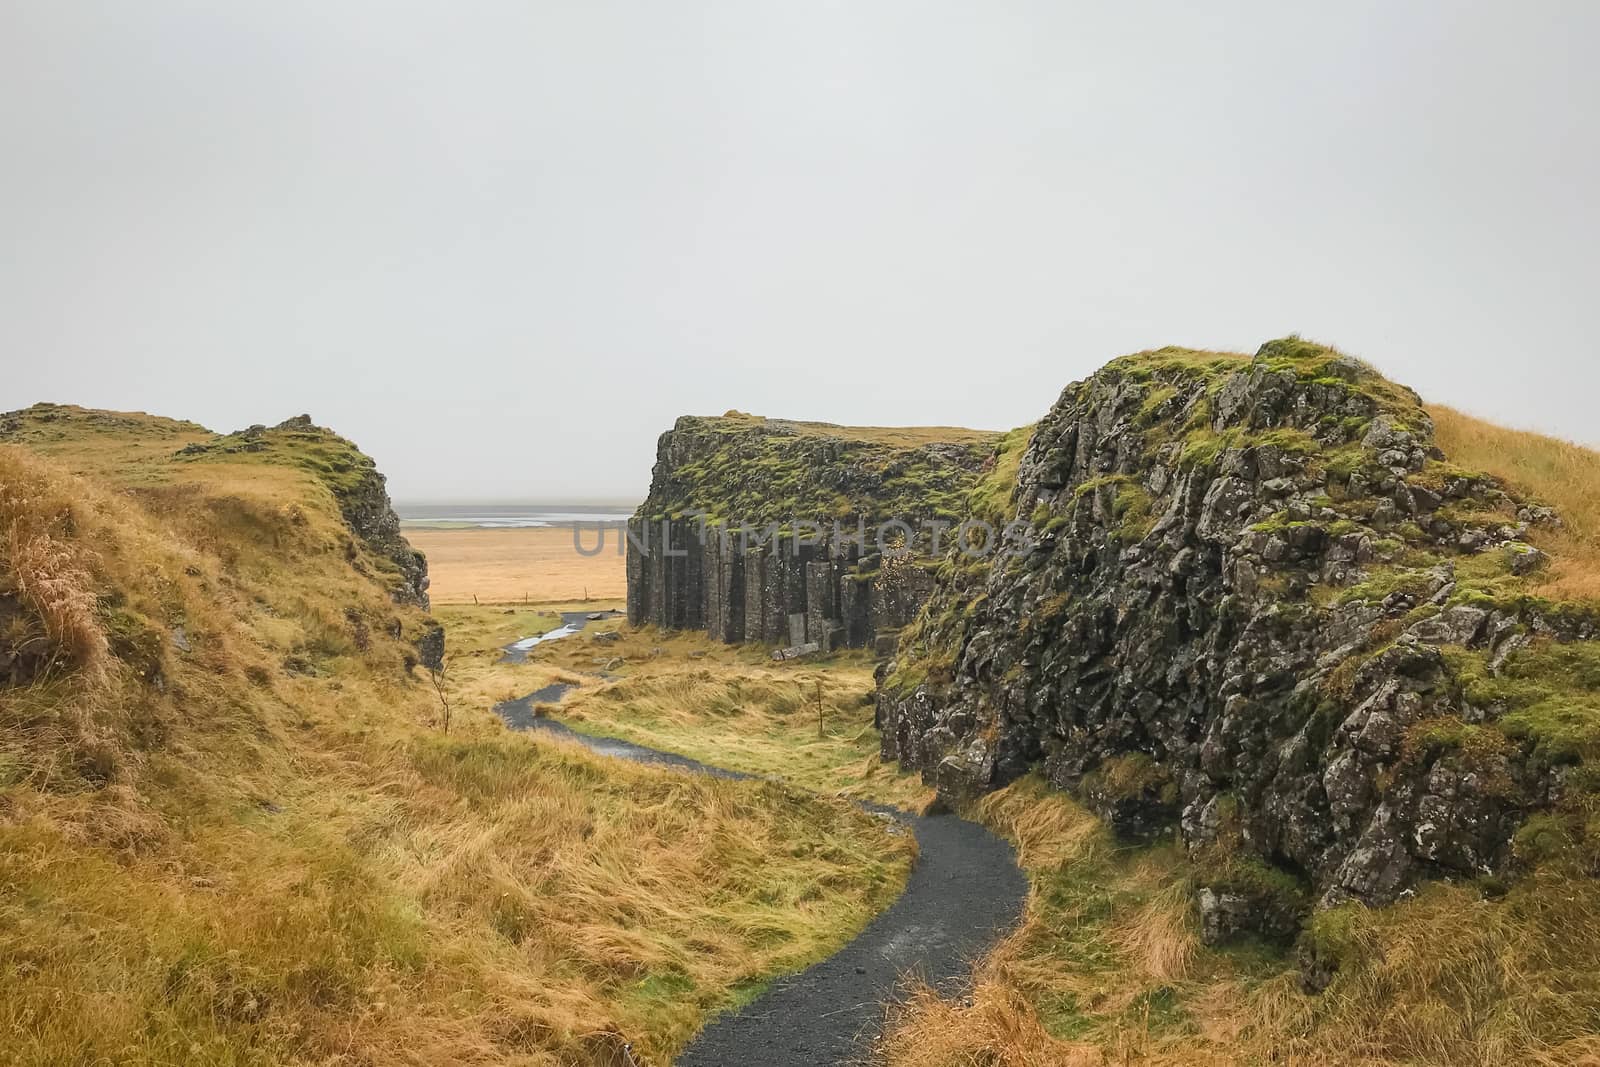 Dverghamrar dwarf hammer natural basalt columns covered in grass in Iceland by MXW_Stock